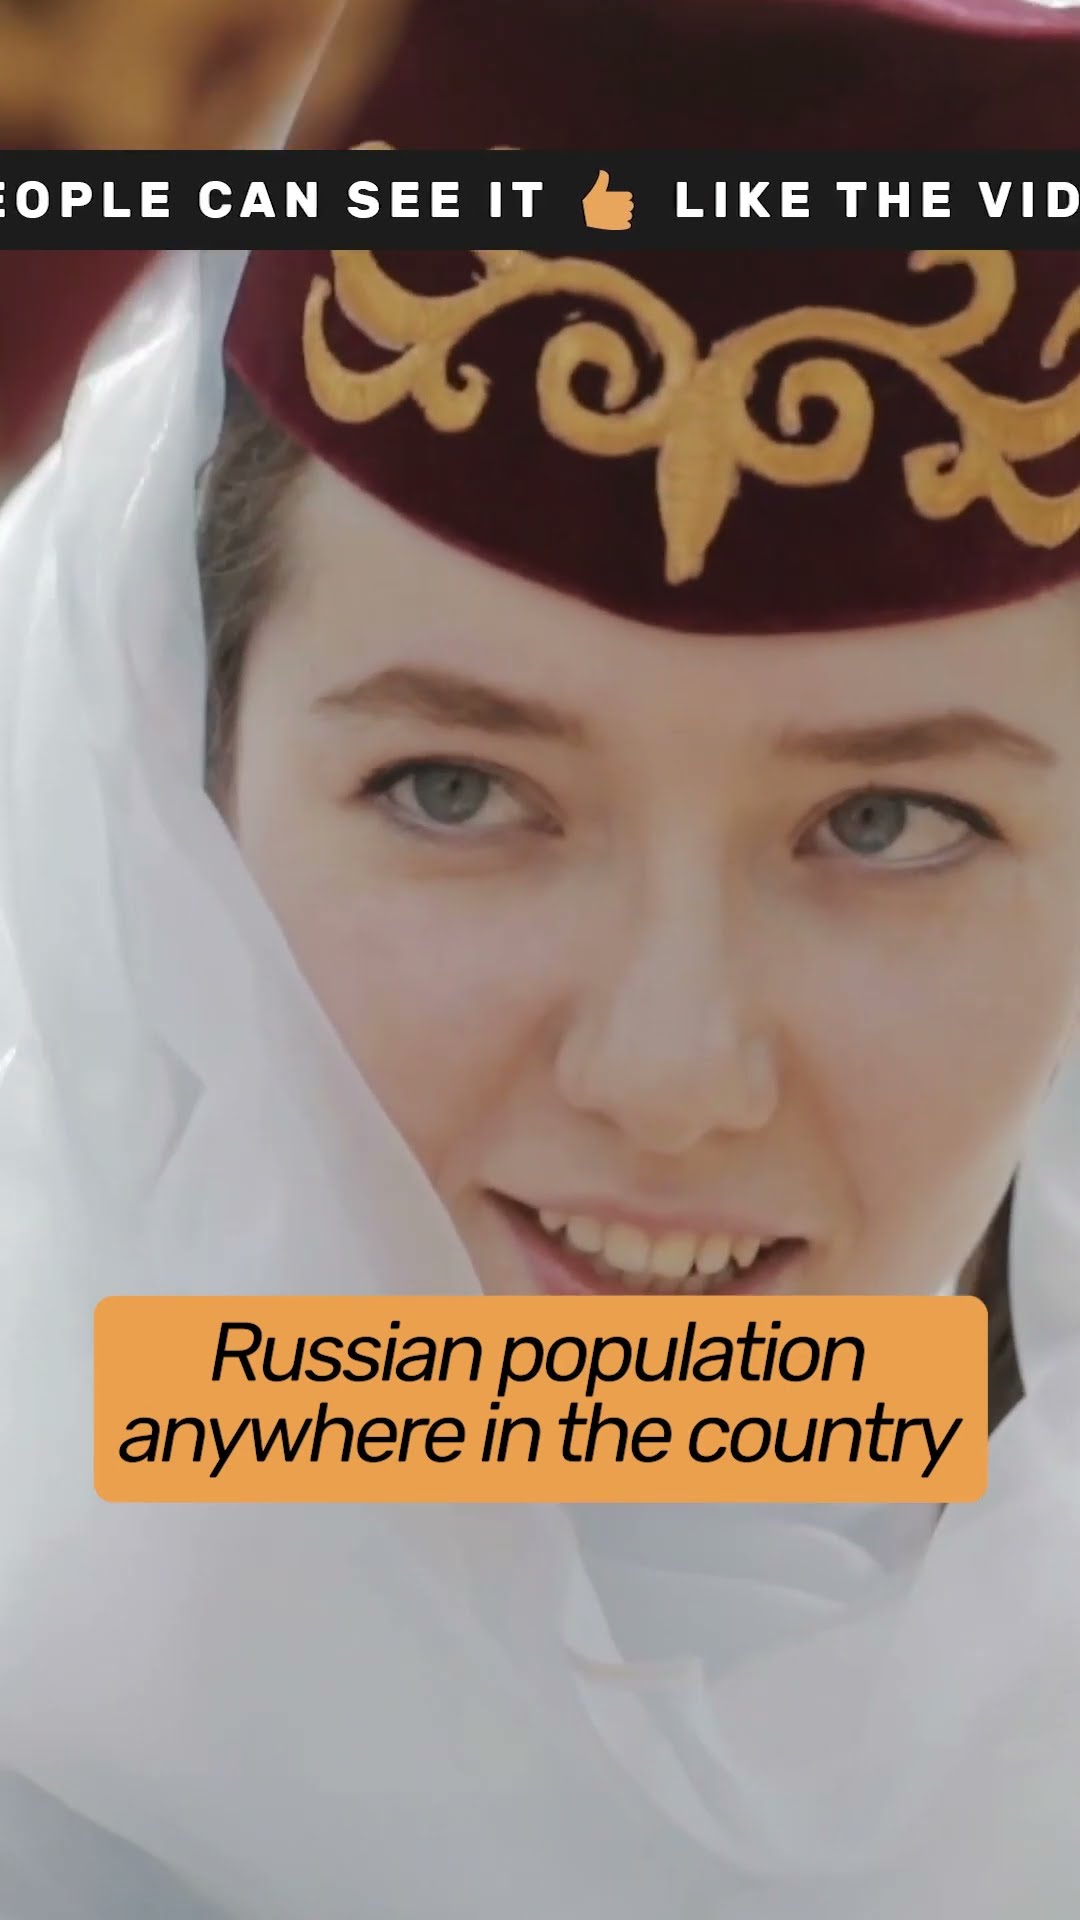 Ingushetia, the smallest region of Russia #americaninrussia